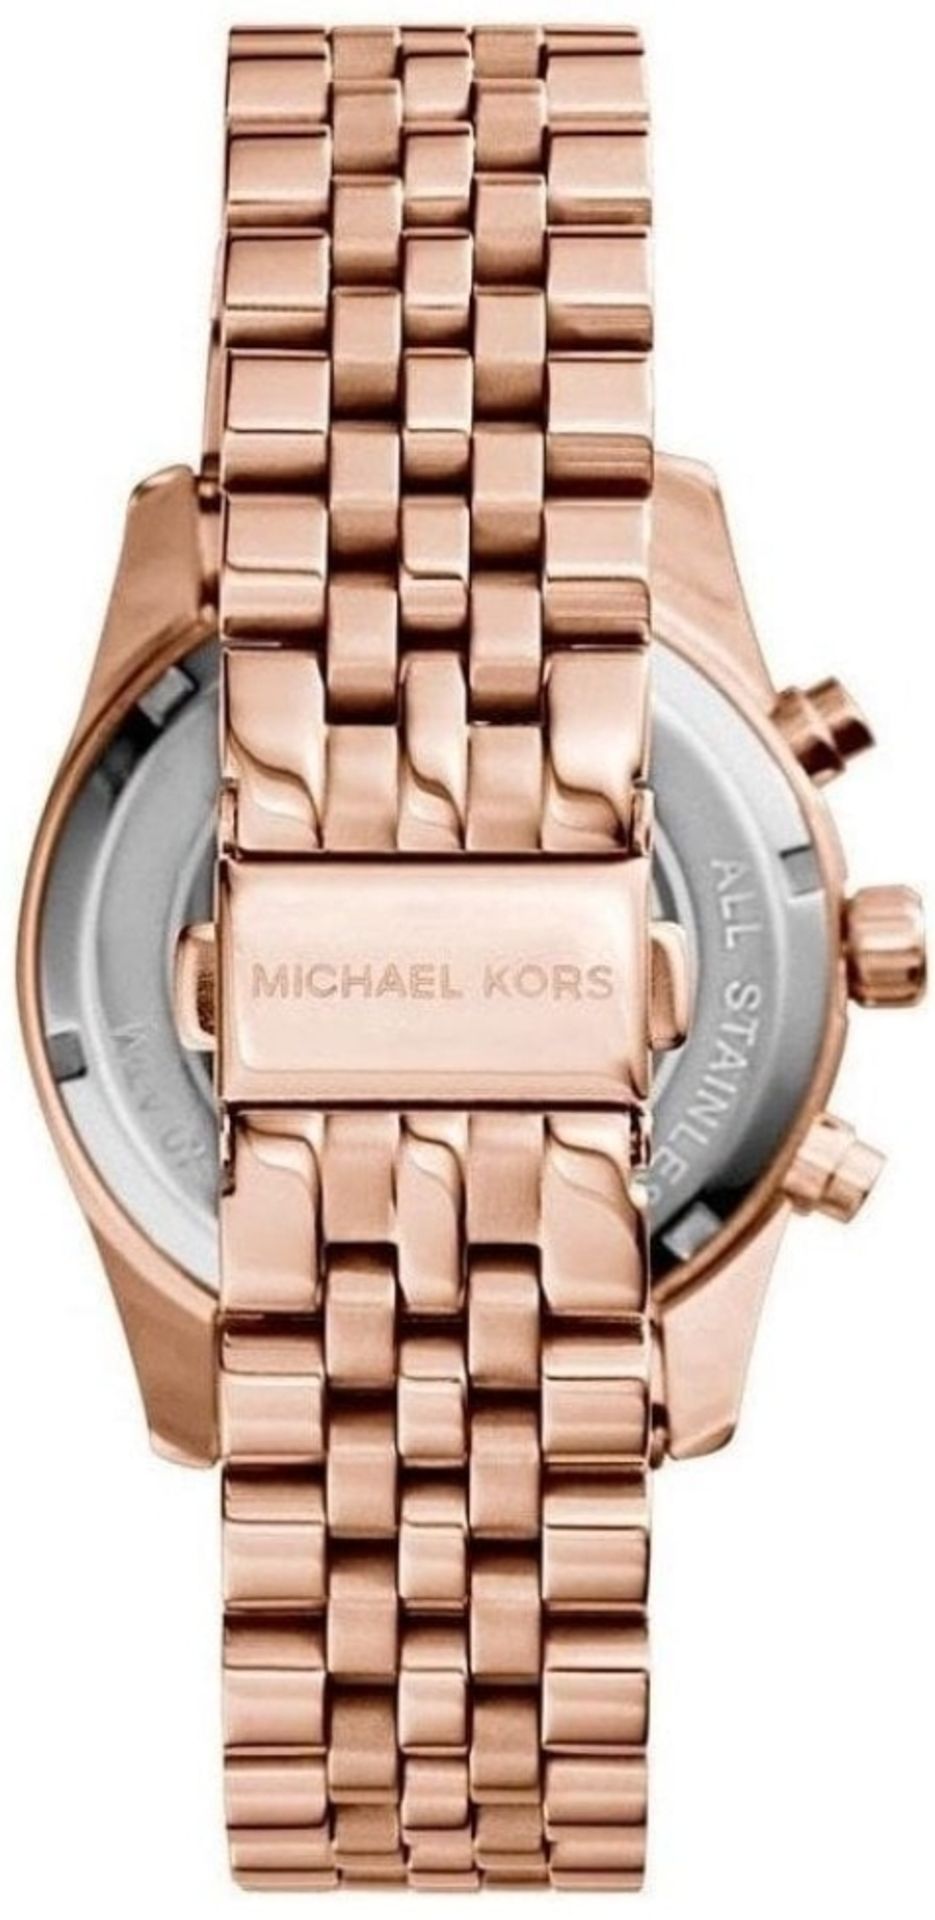 Michael Kors MK5569 Ladies Rose Gold Lexington Quartz Watch - Image 7 of 8